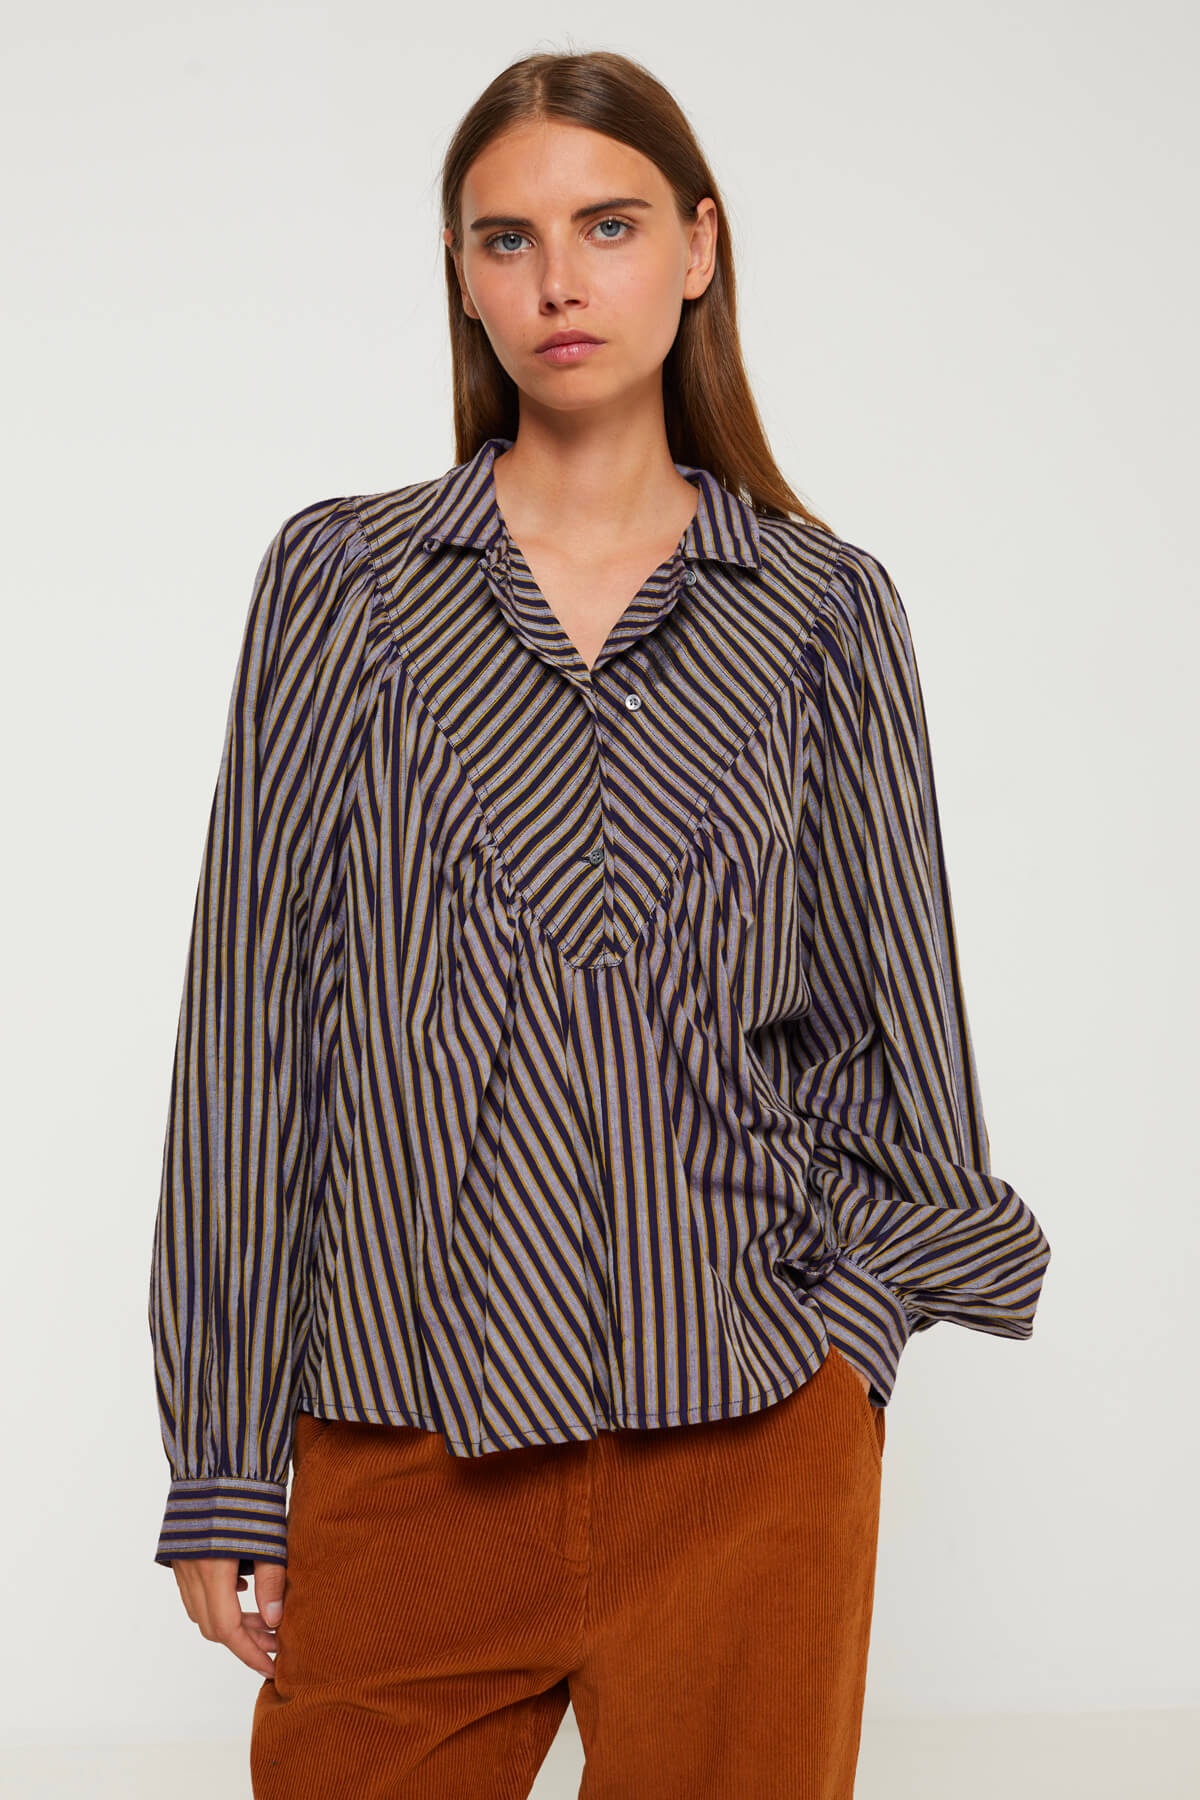 TOPSY lightweight striped blouse - CHARLIE JOE